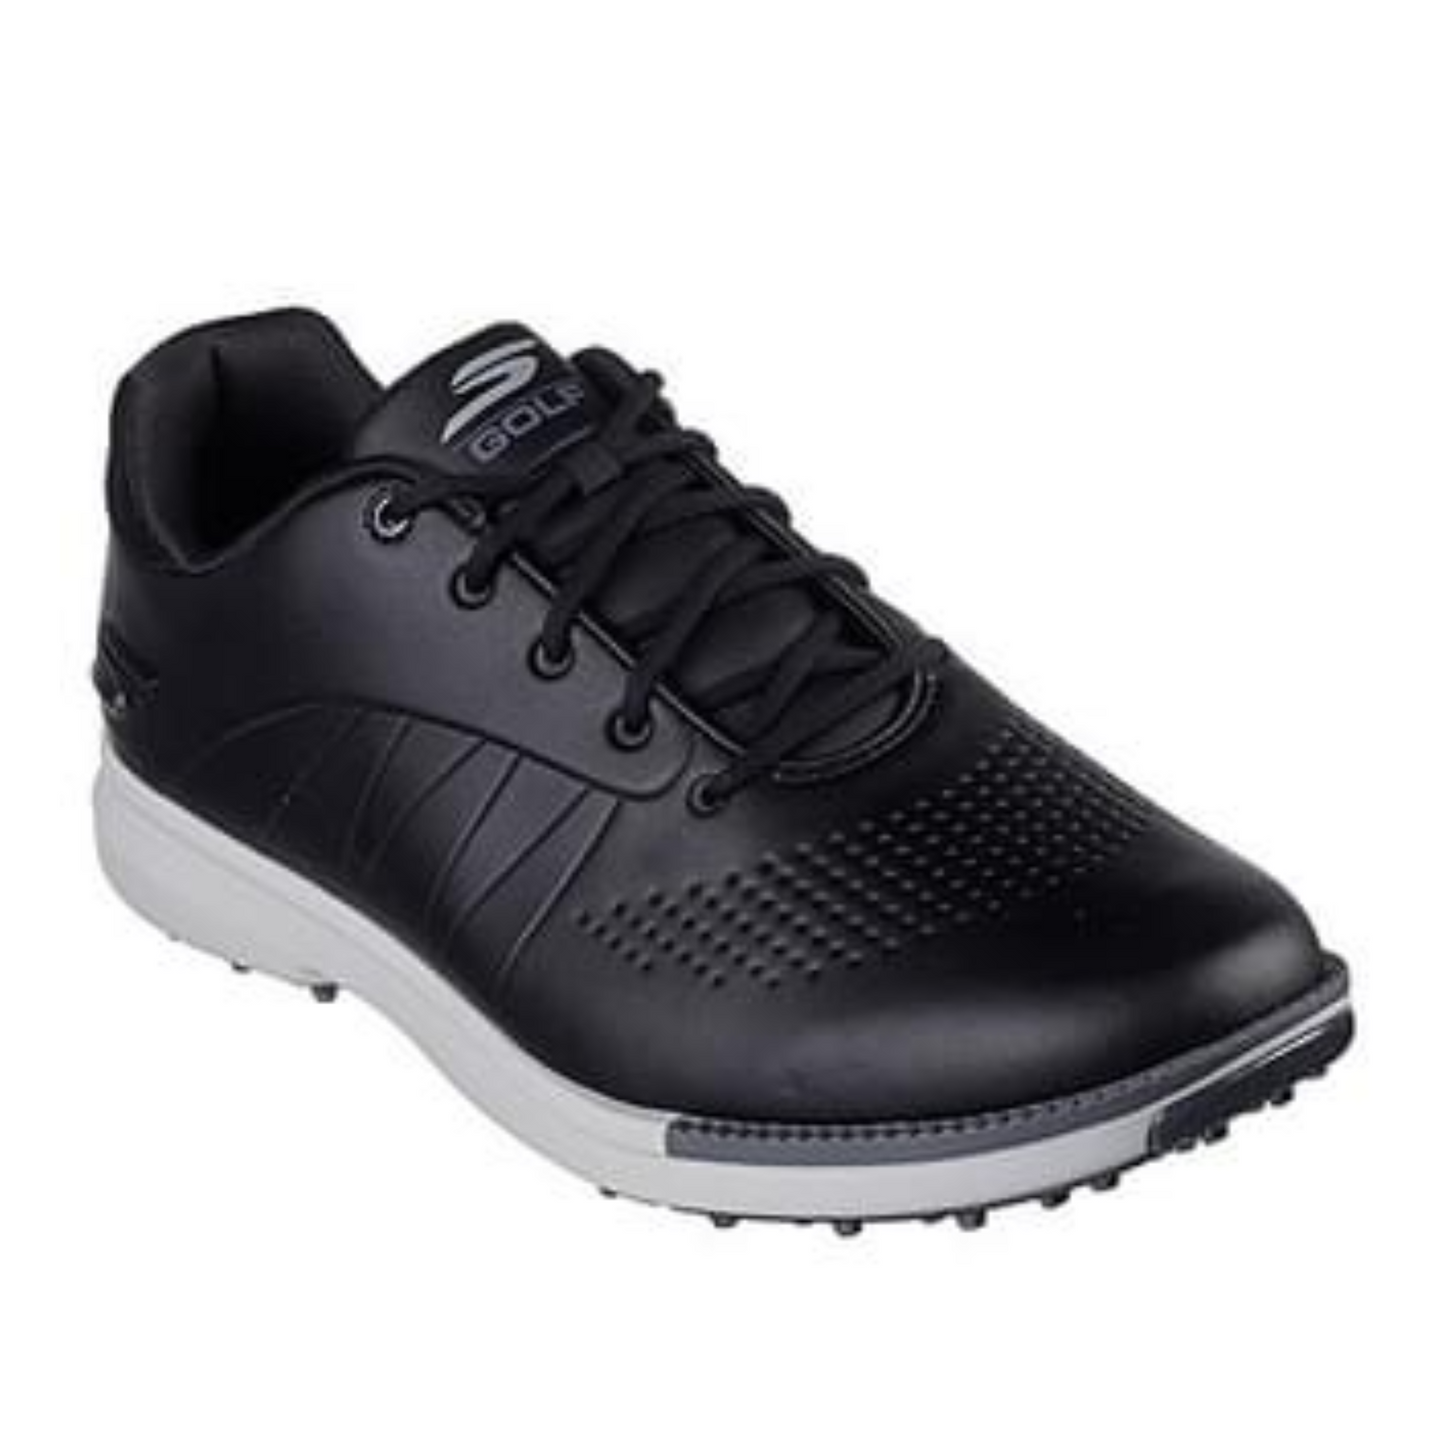 Skechers Go Golf Tempo GF Spikeless Golf Shoes 214099 - Black   